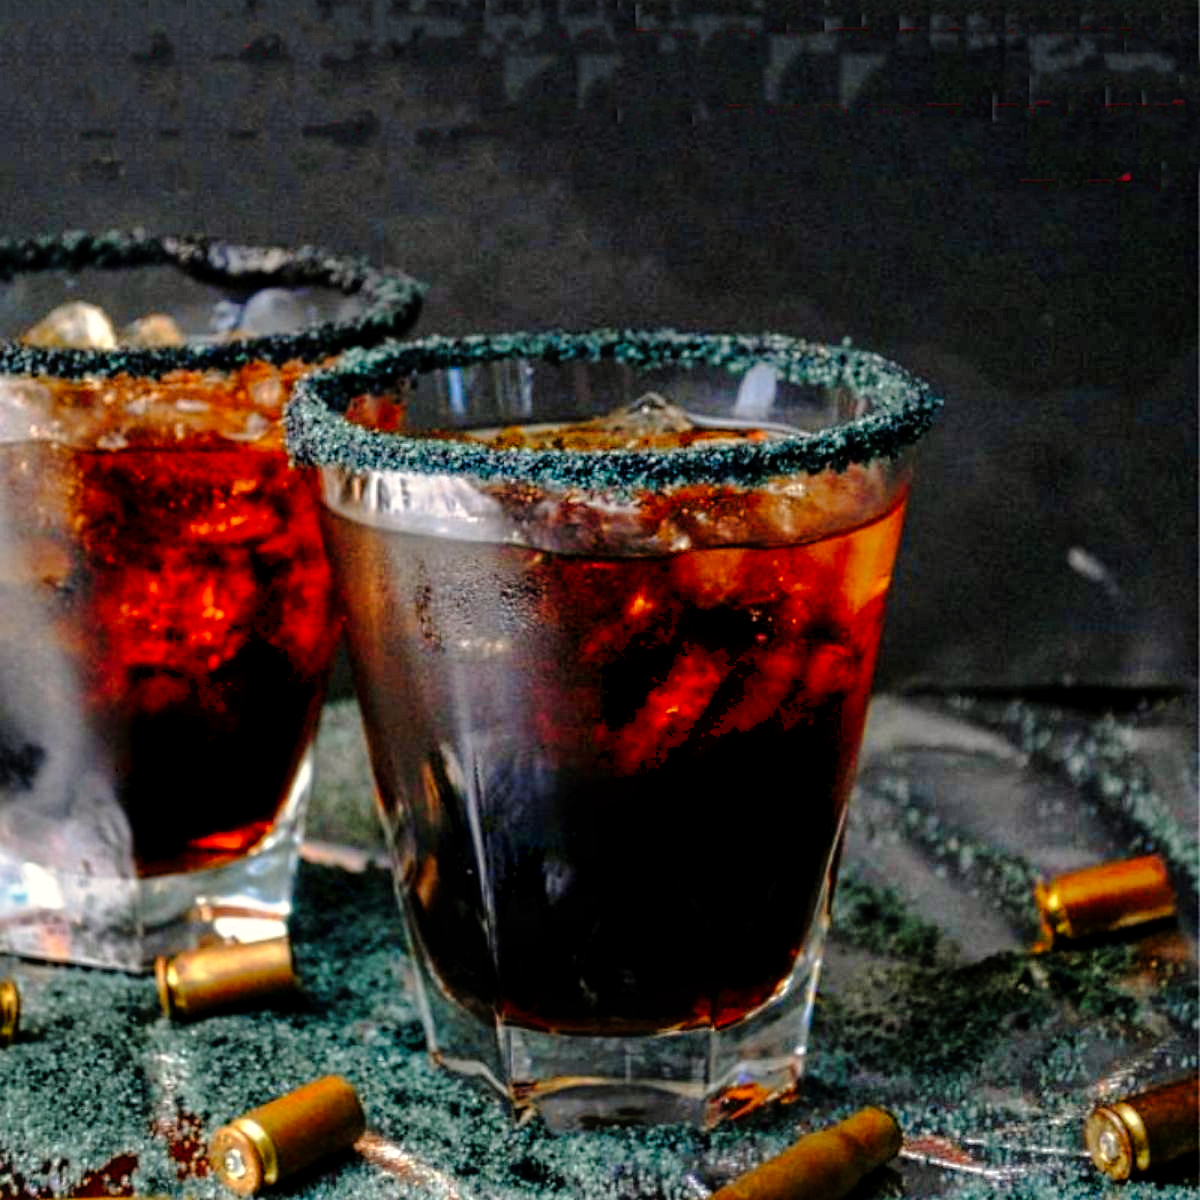 1. Deadshot Cocktail - Jack Daniels bonded whiskey